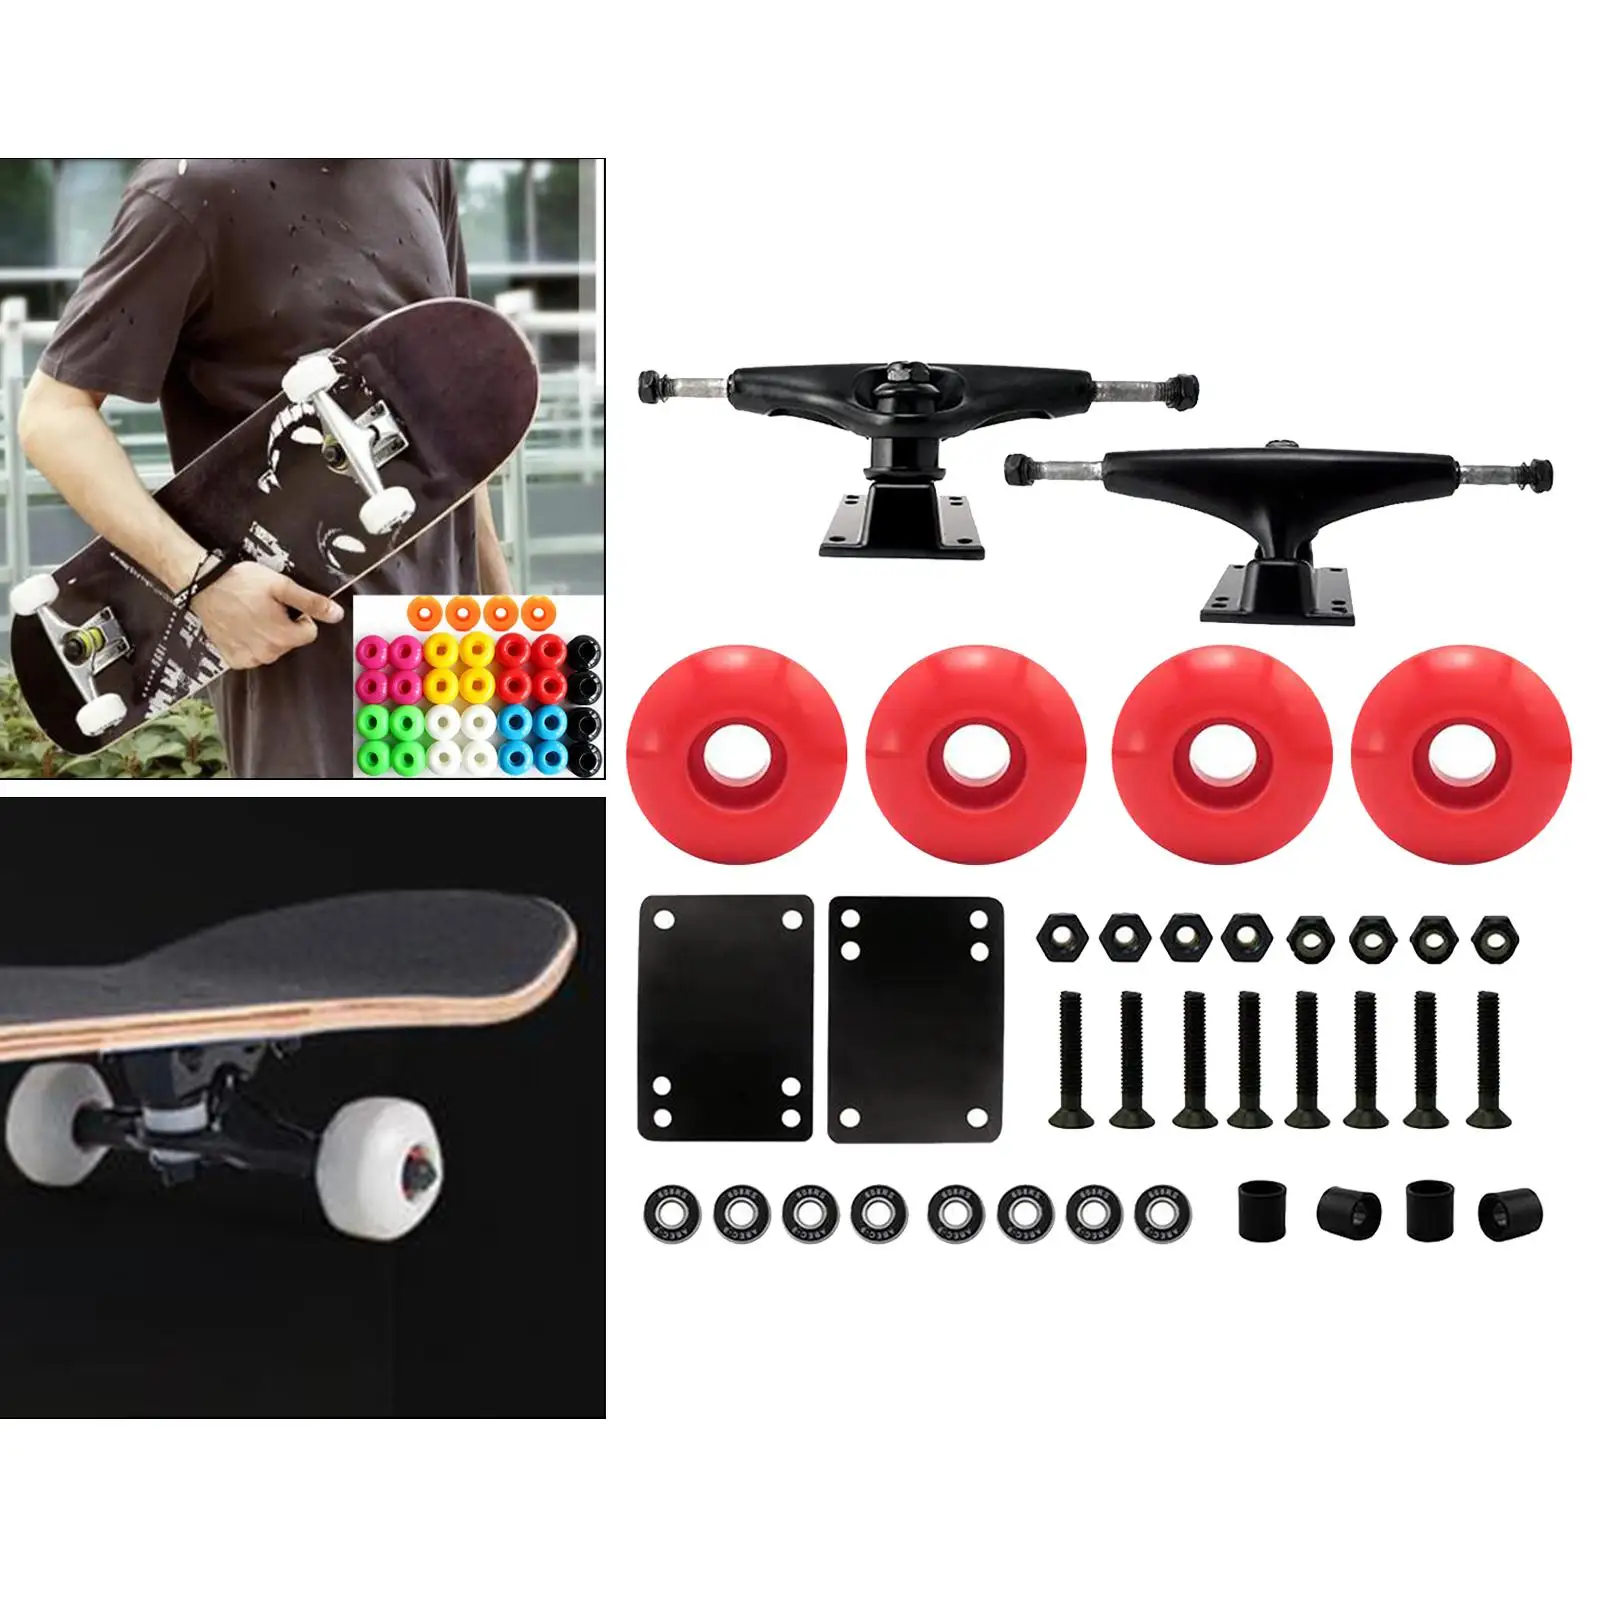 Skateboard Wheels with Bearings 52mm, Skateboard Trucks, Skateboard Riser Pads,